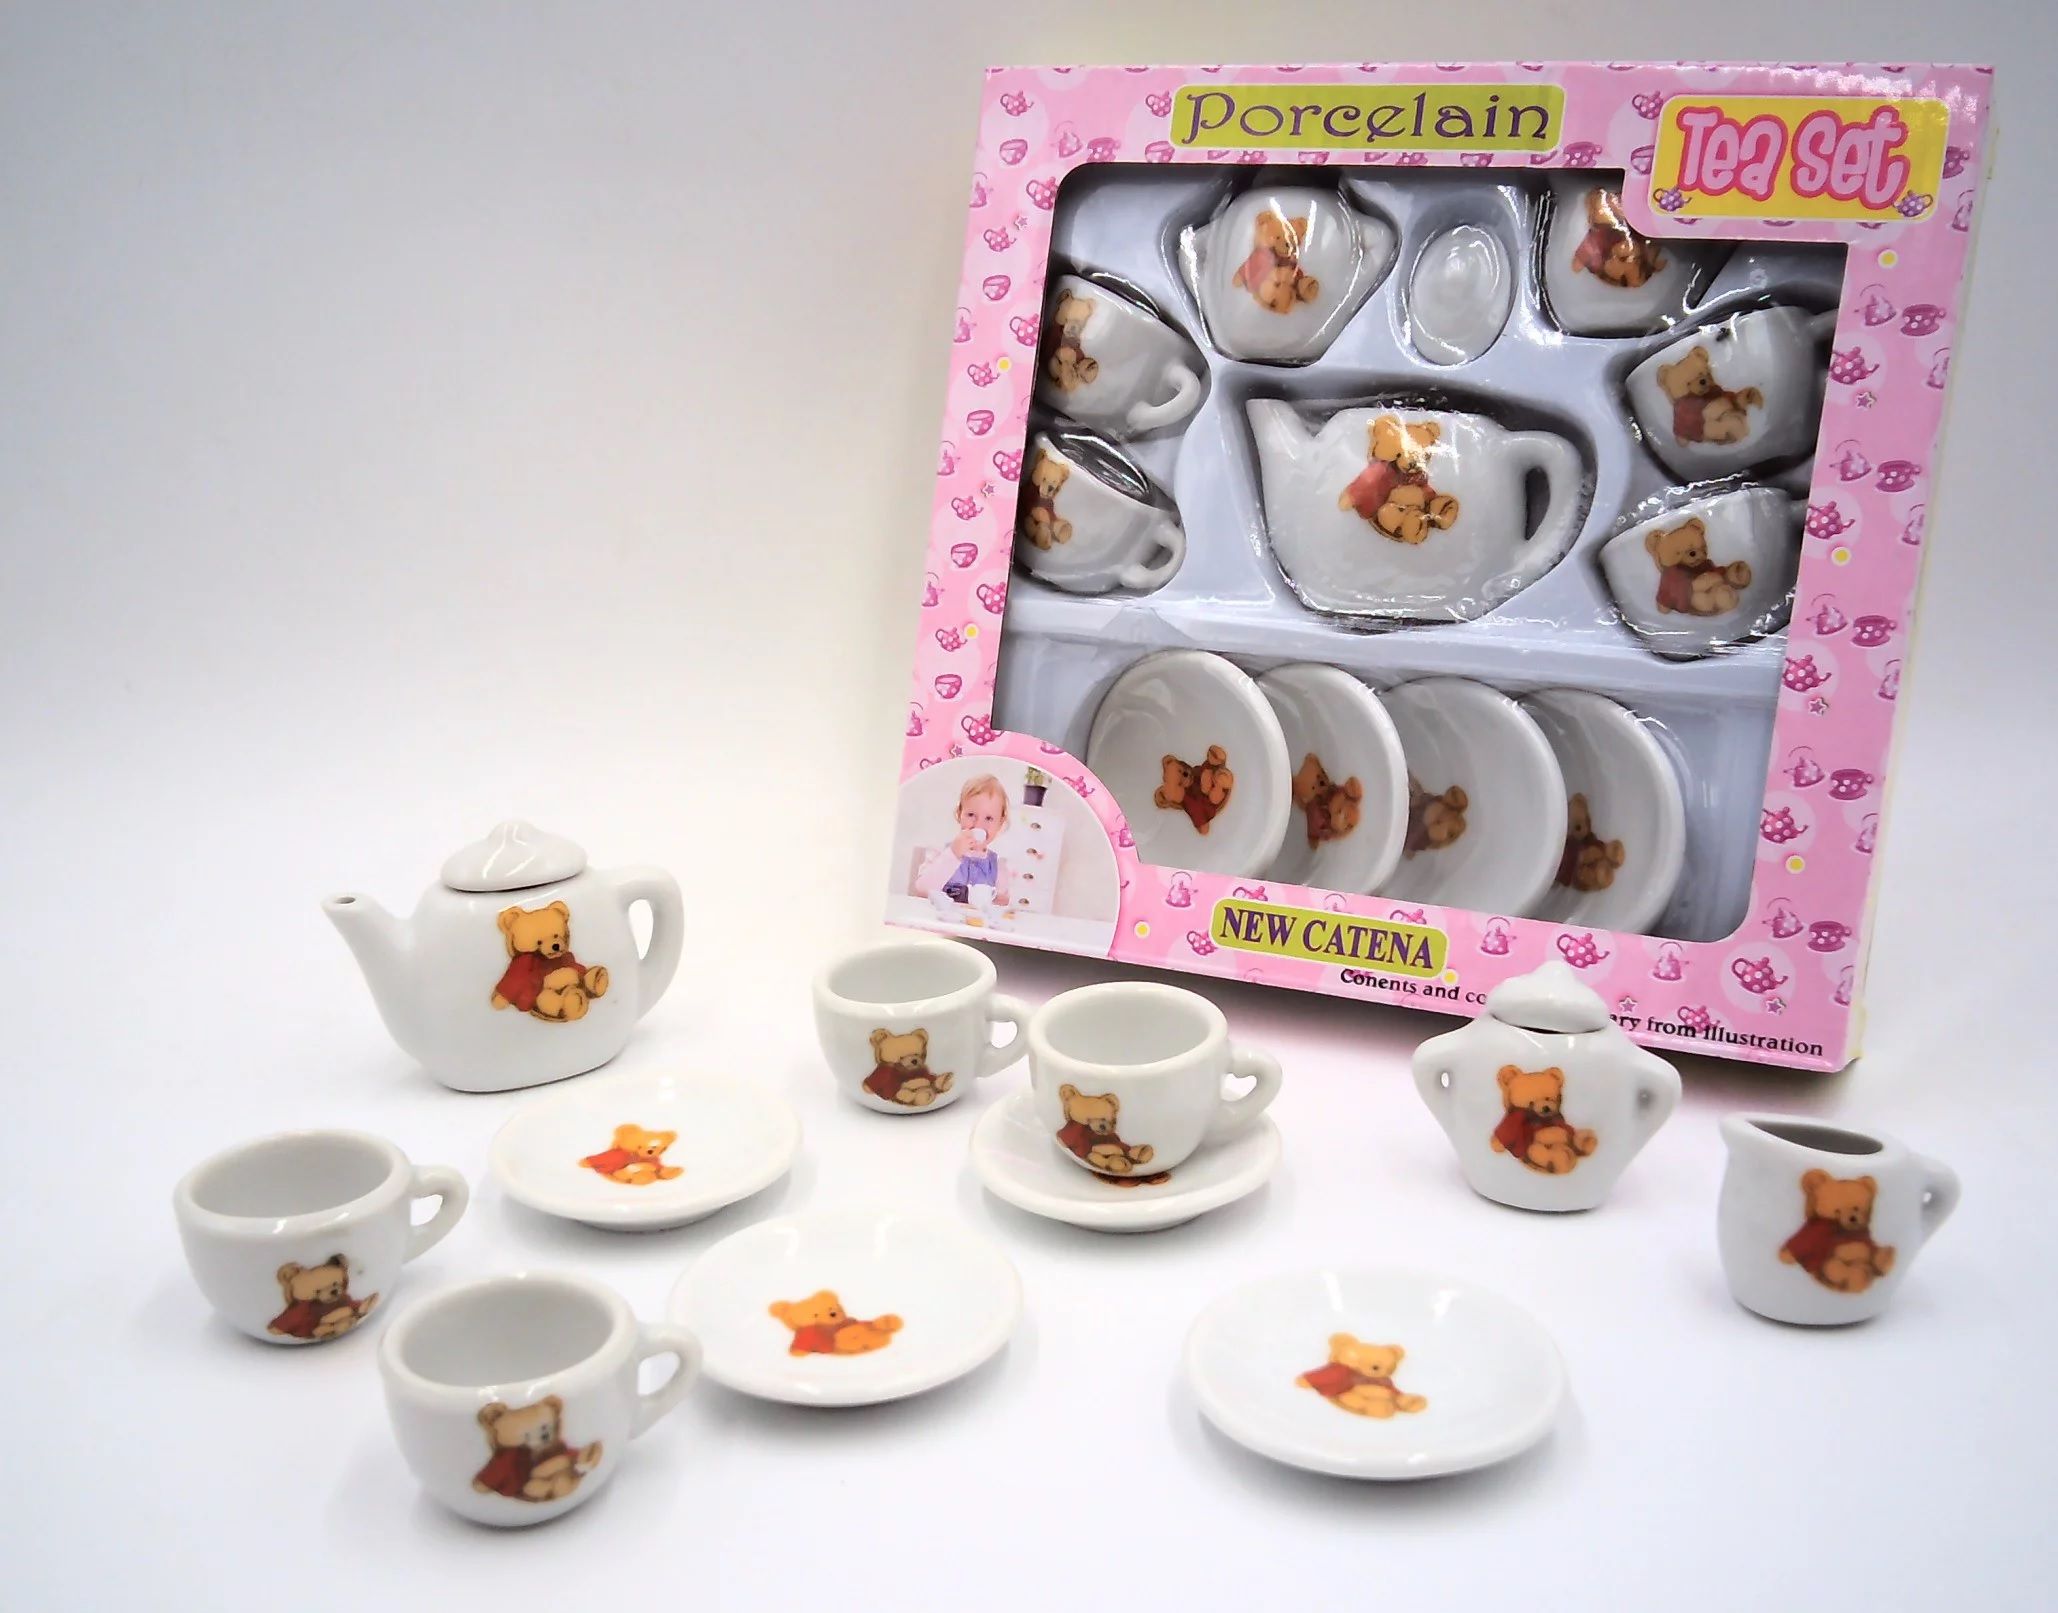 GIRL FUN TOYS 13 Piece Real Porcelain Ceramic Tea Set Toy For Little Girls - .